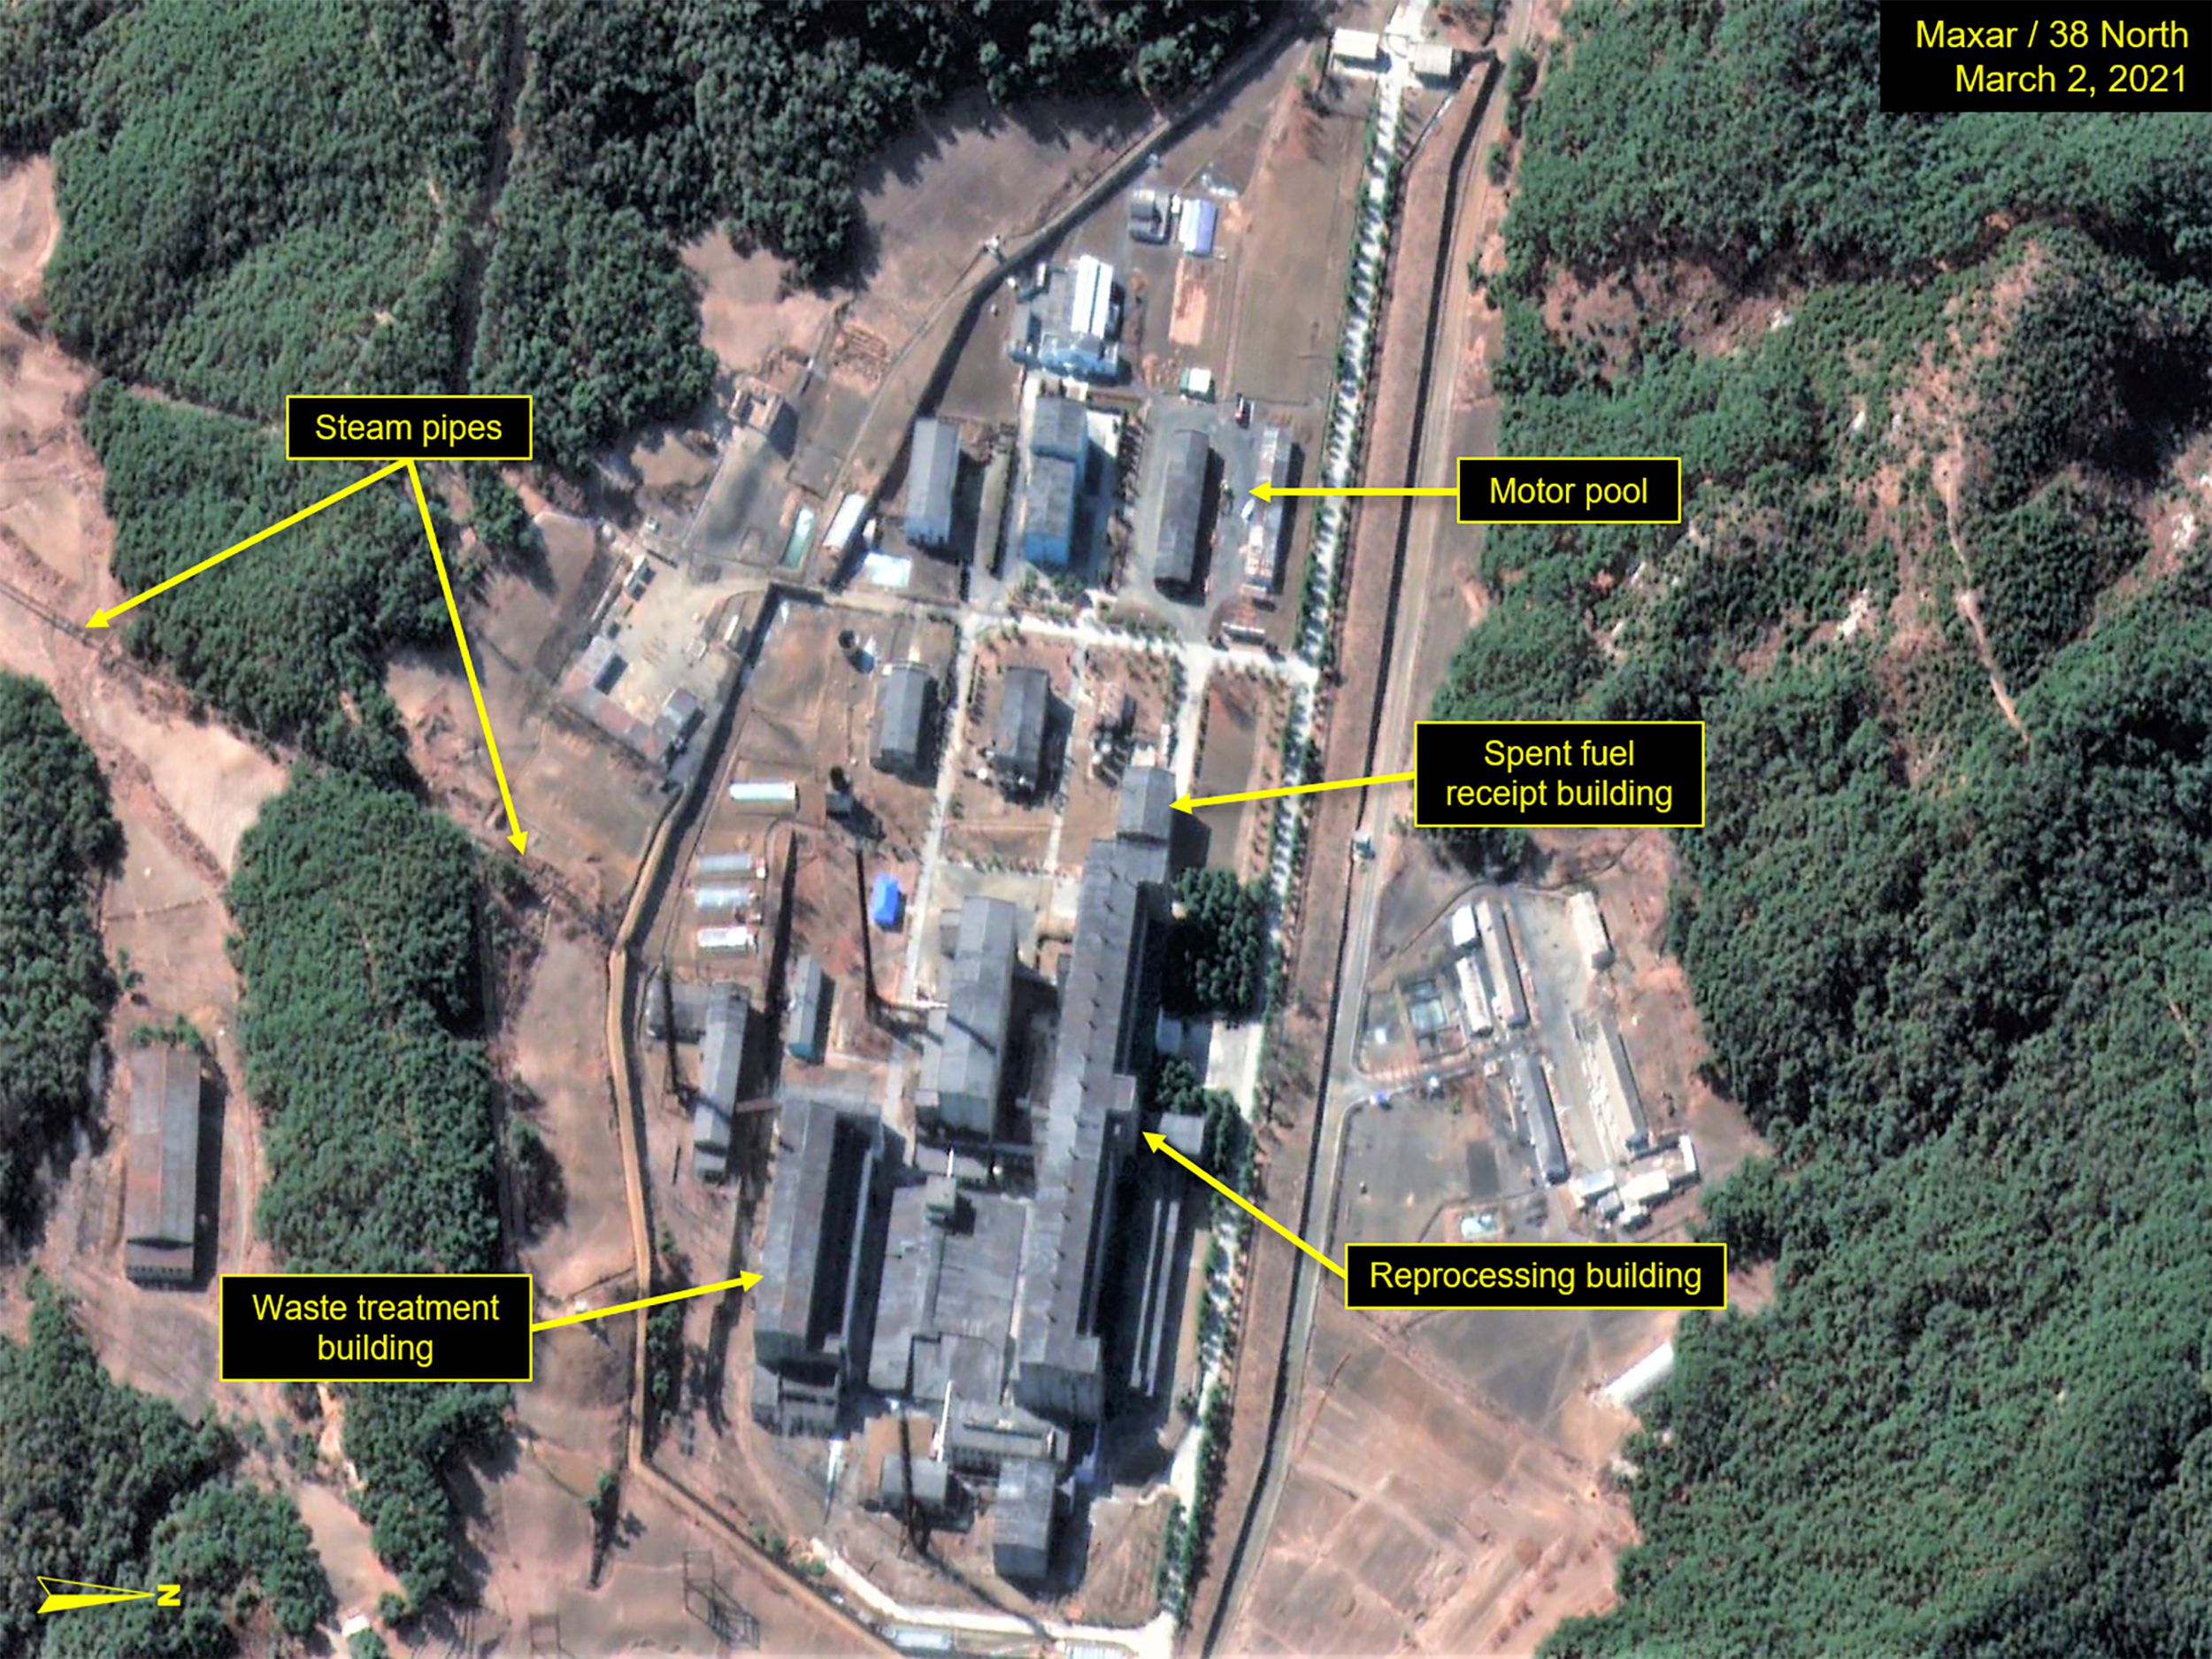 north korea nuclear sites